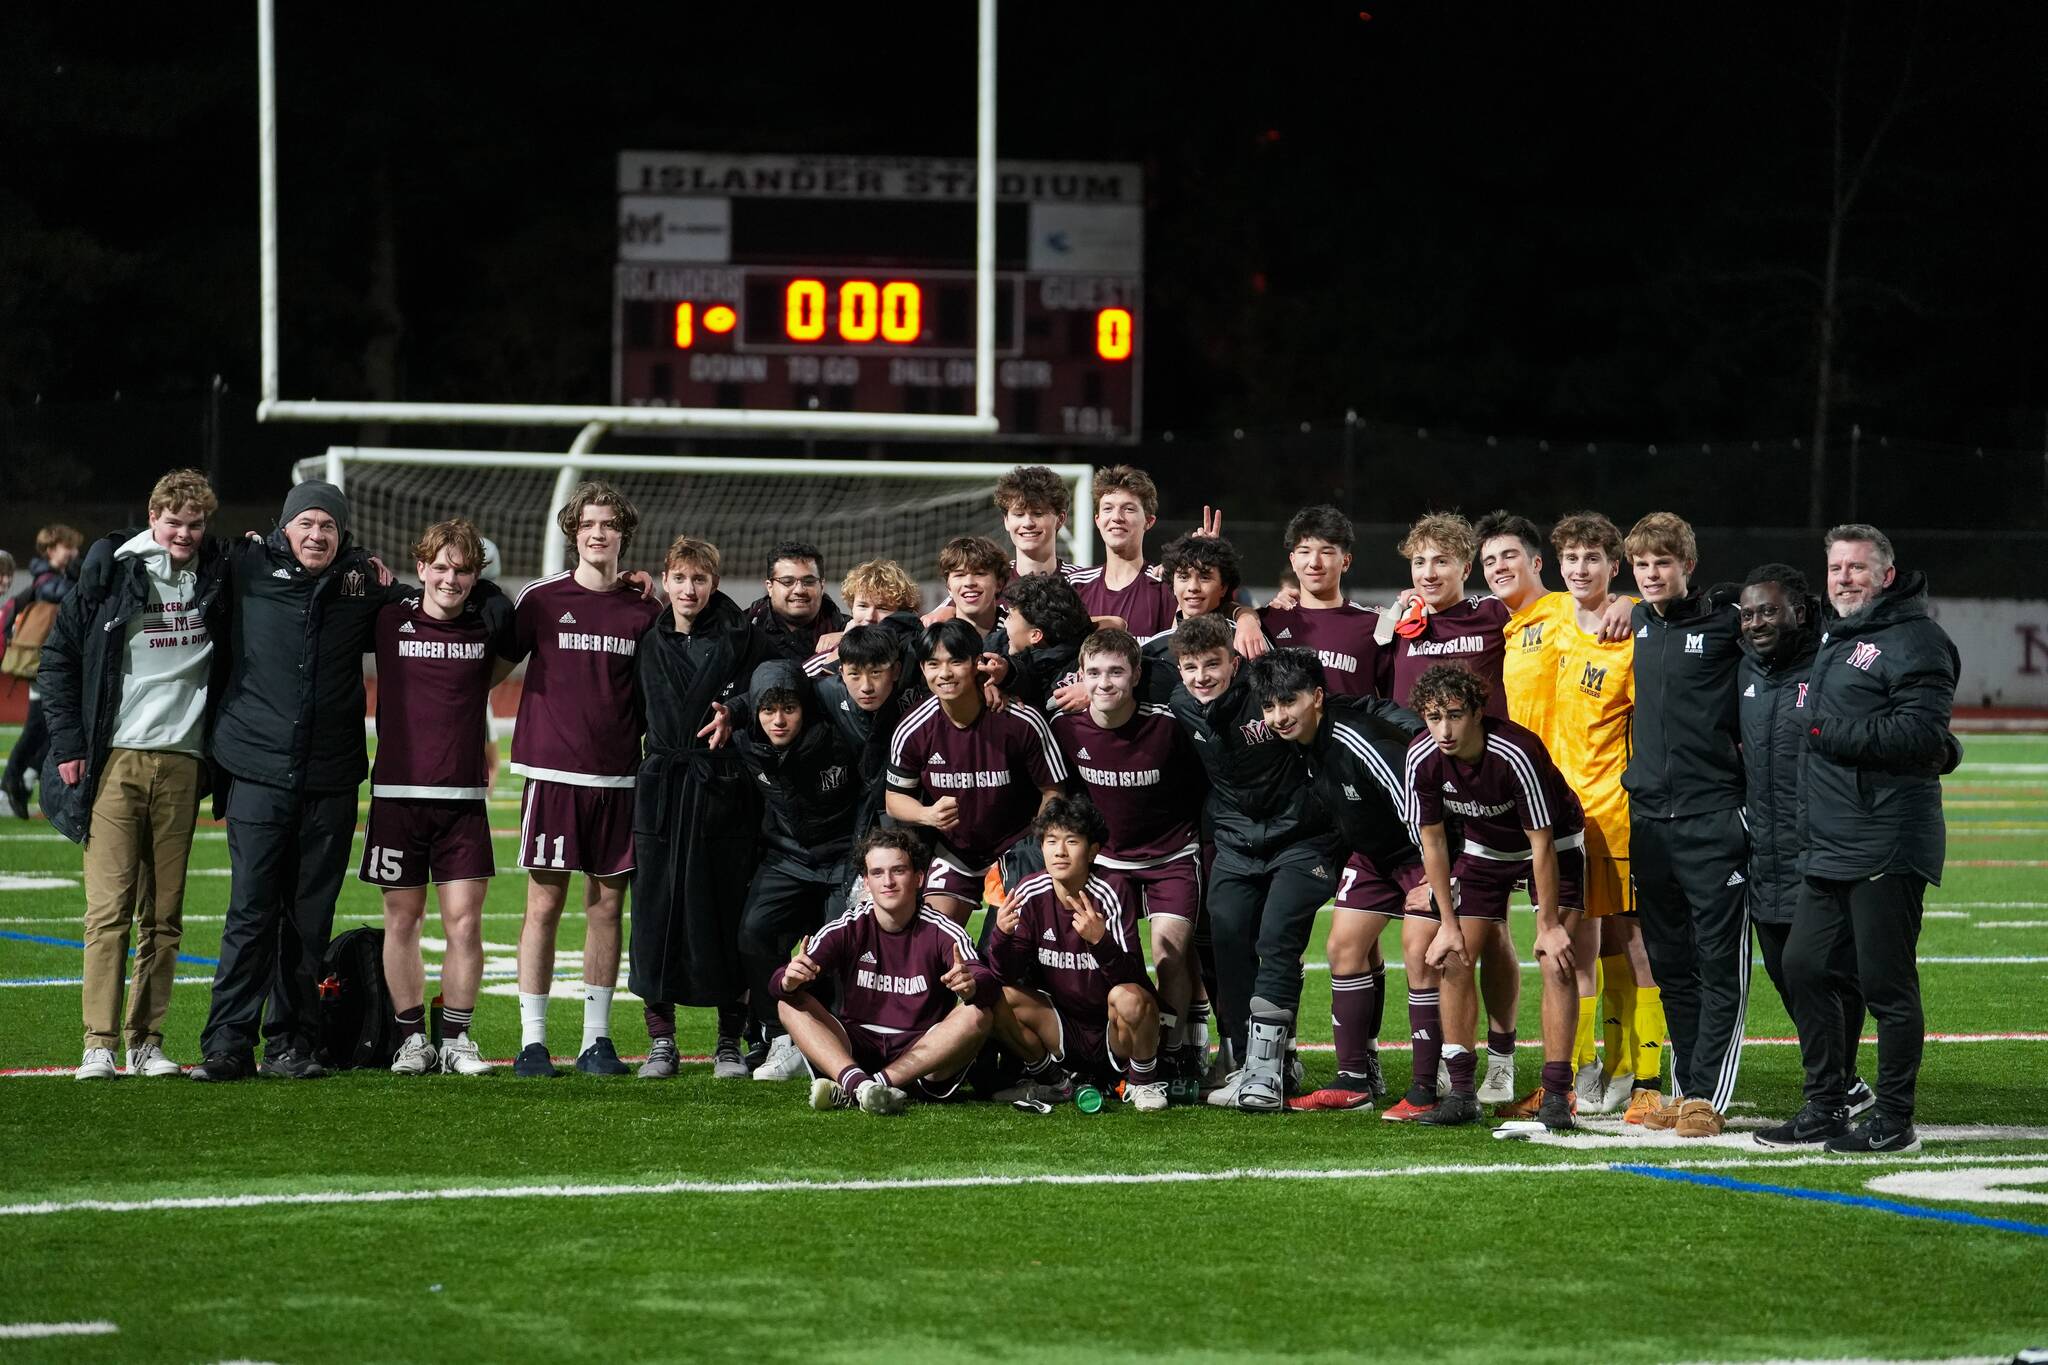 Mercer Island High School’s boys varsity soccer team. Photo courtesy of Cliff Martin